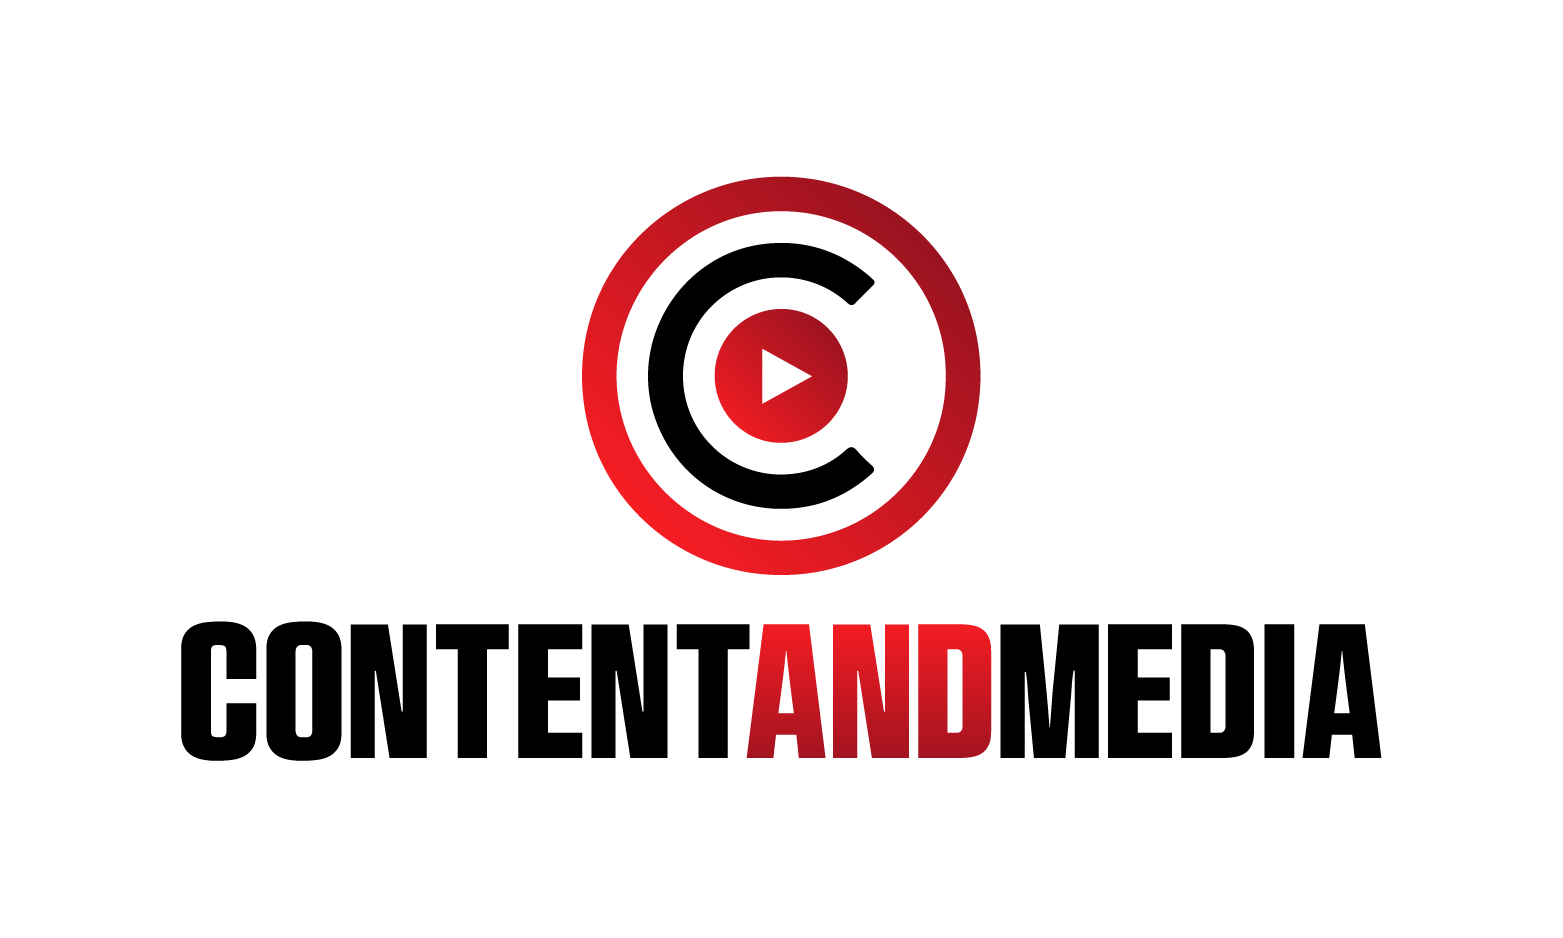 ContentAndMedia.com - Creative brandable domain for sale